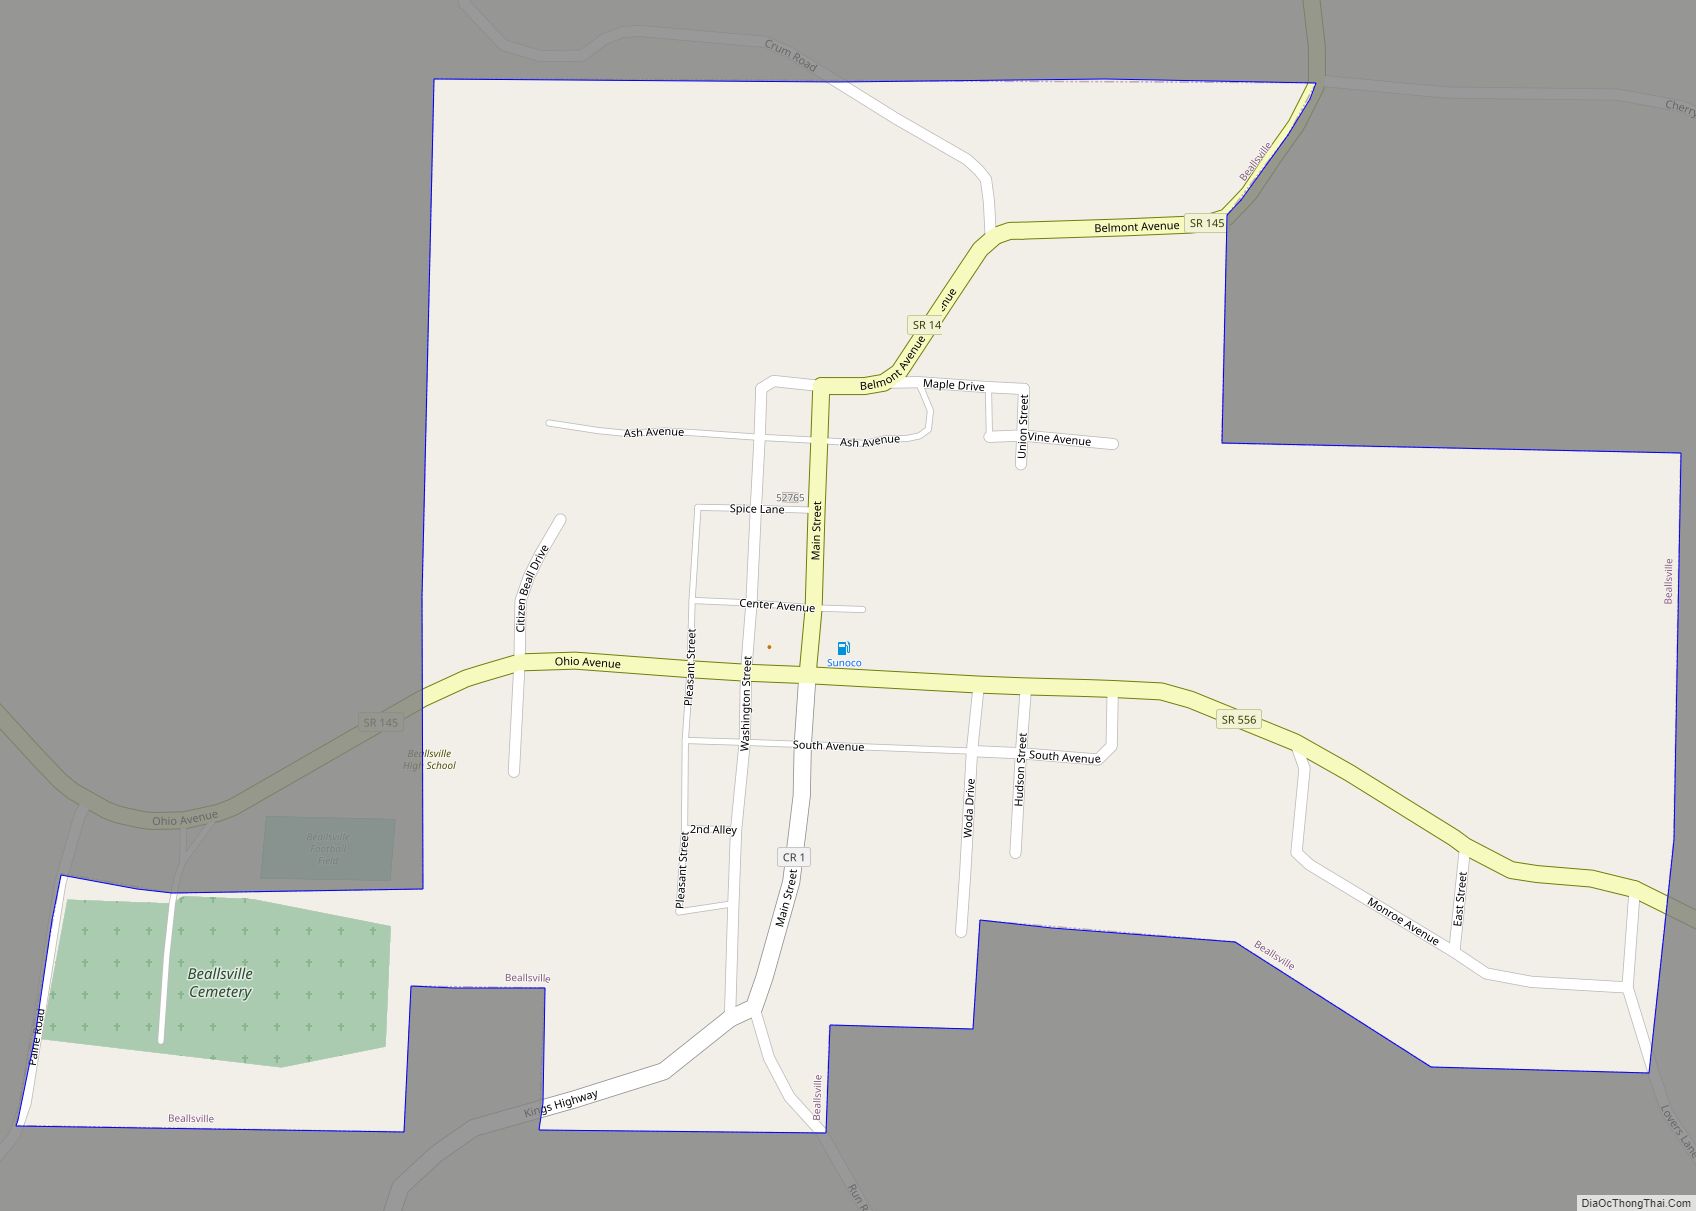 Map of Beallsville village